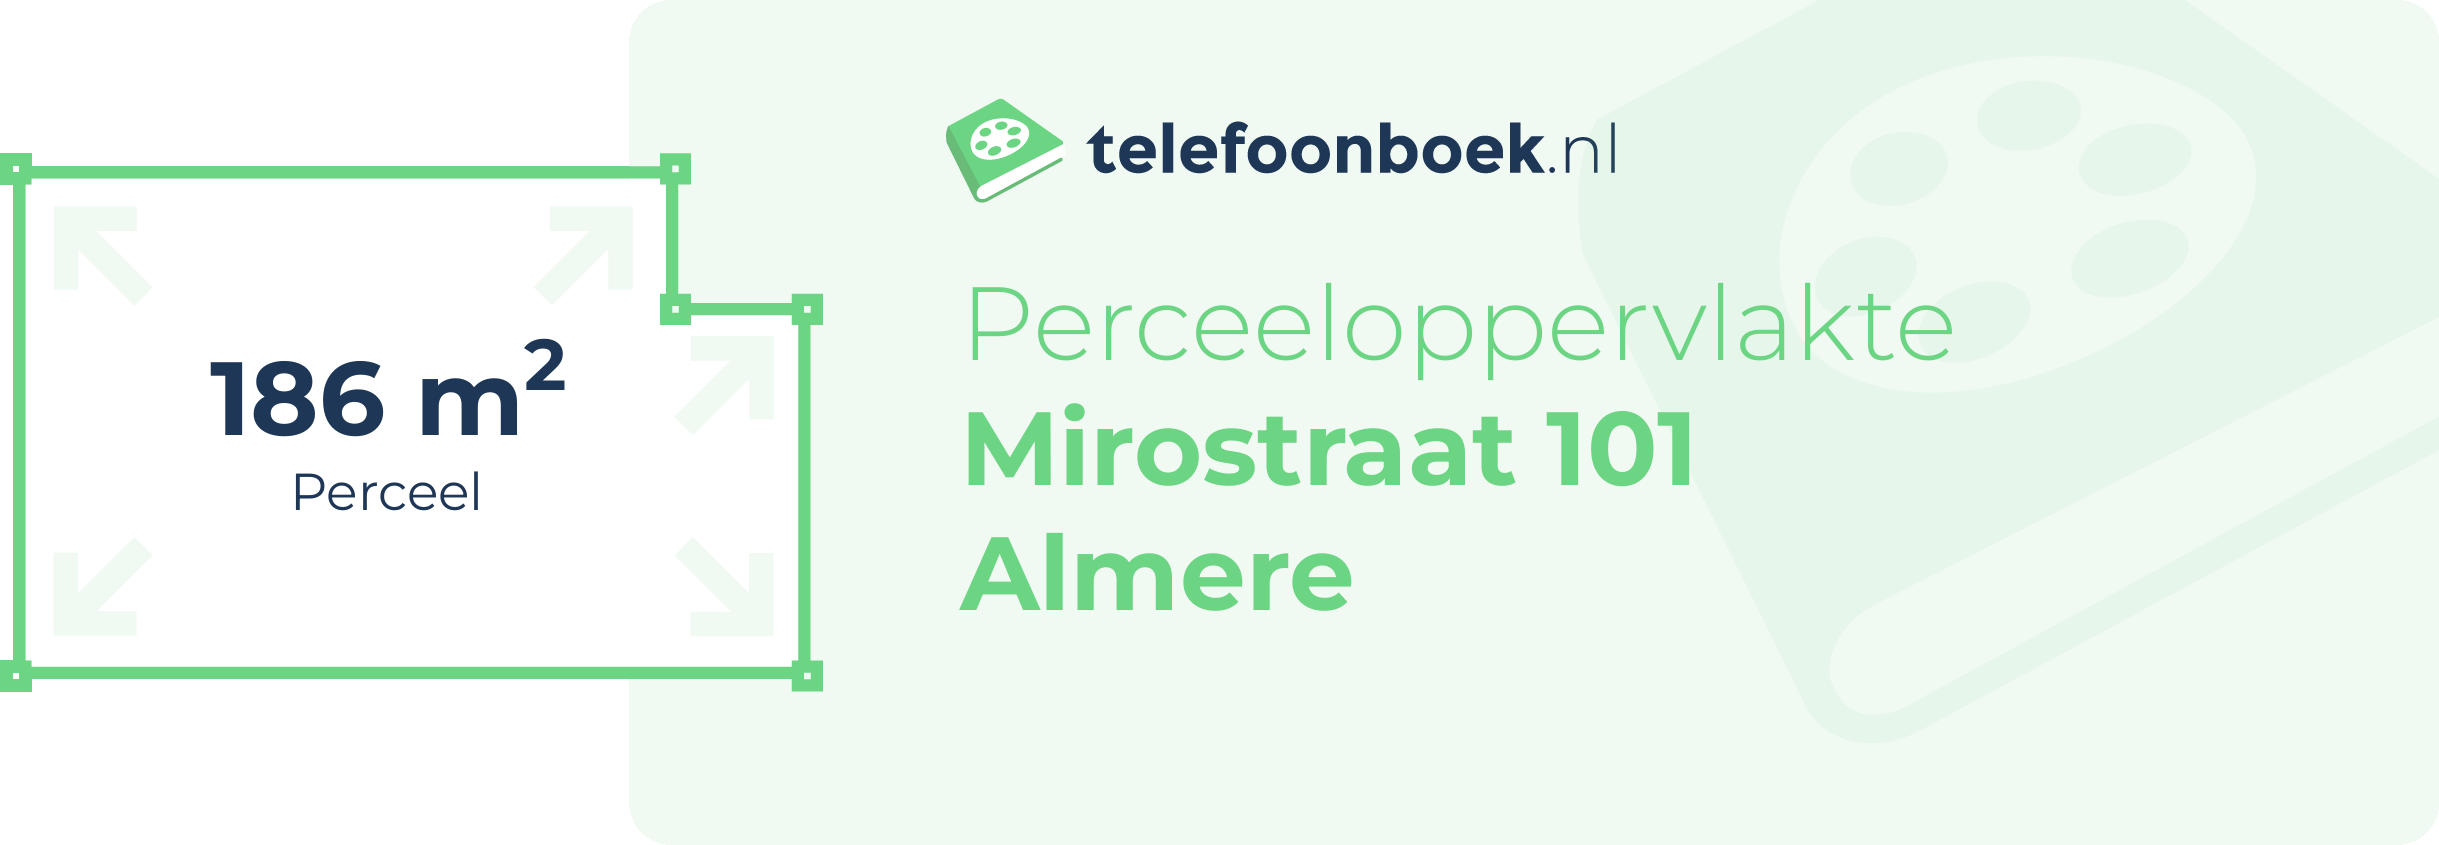 Perceeloppervlakte Mirostraat 101 Almere